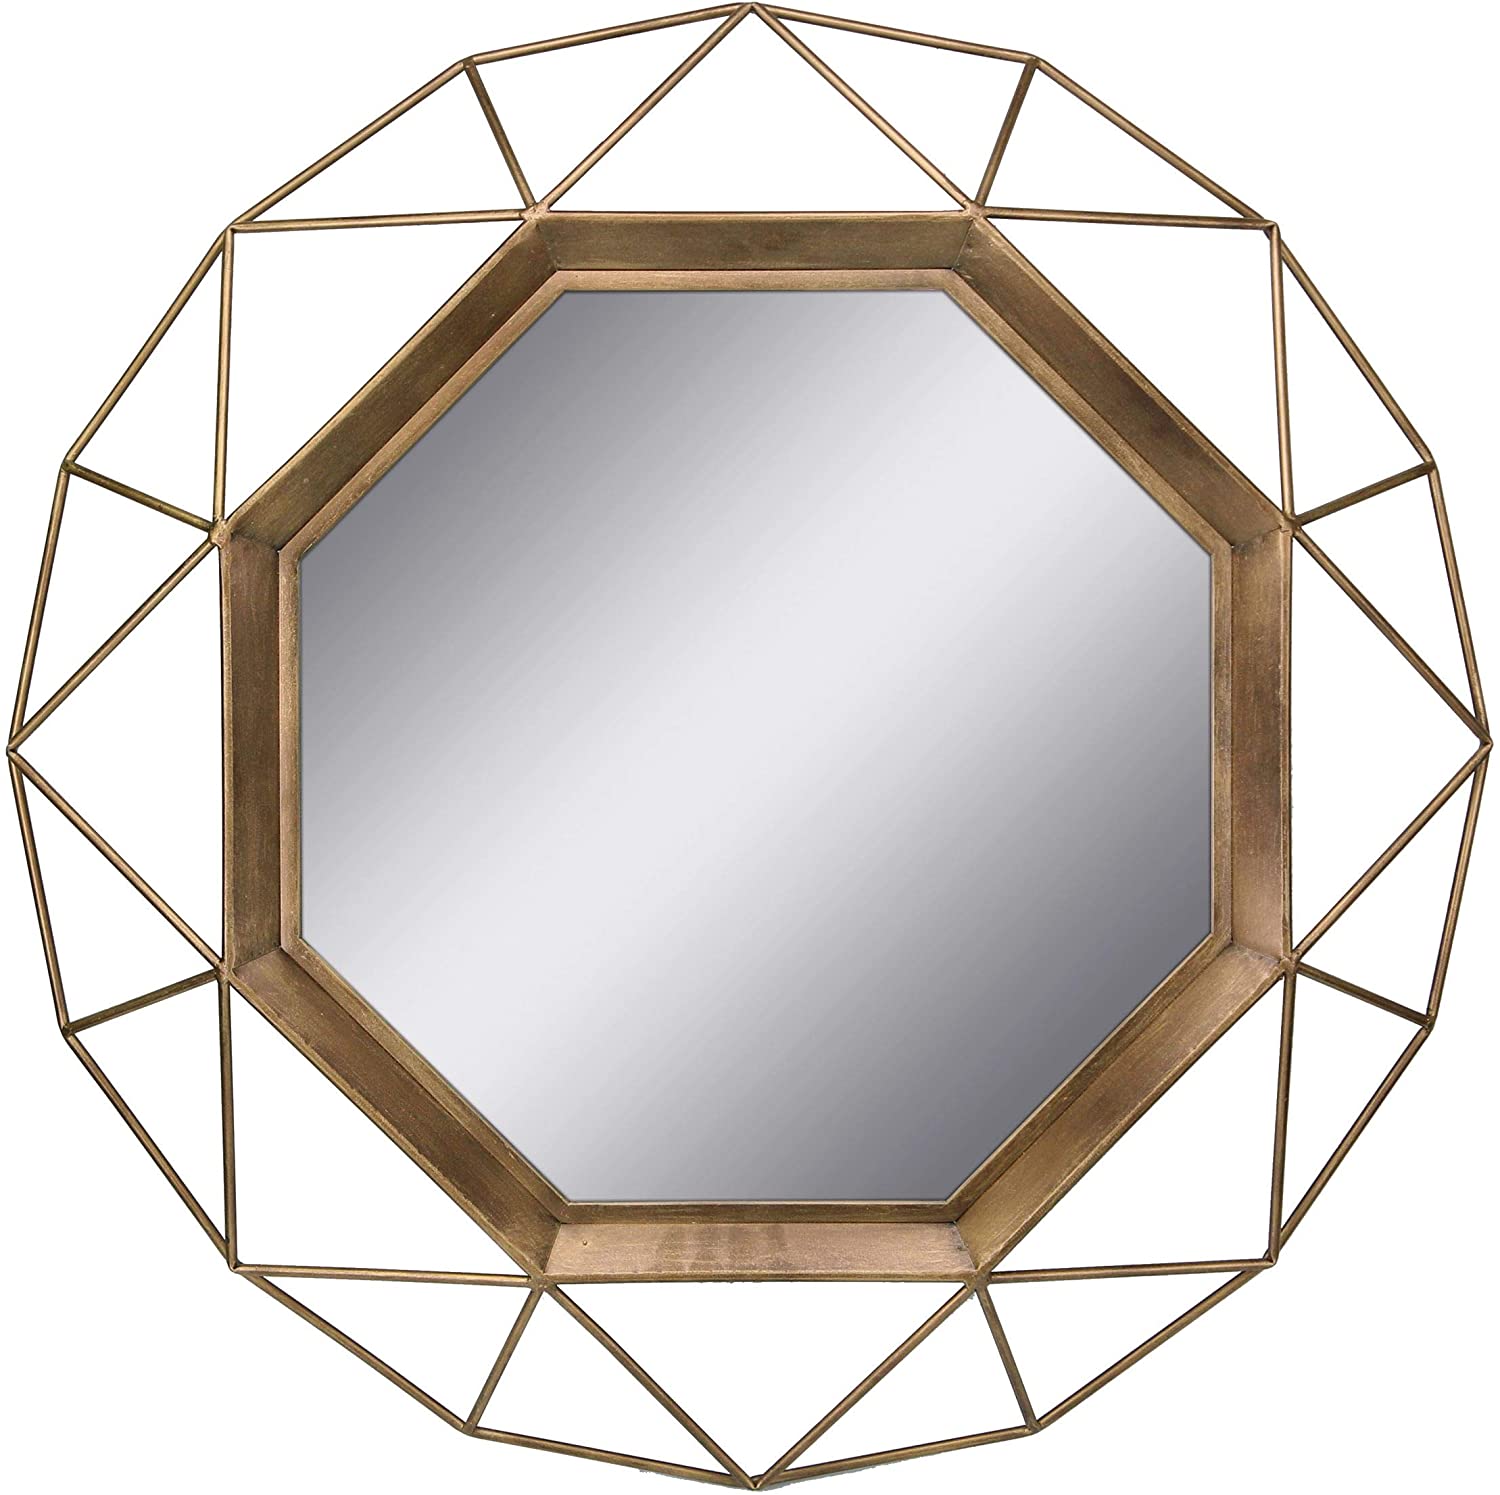 Stonebriar Gold Geometric Wall Mirror, 30×30-Inch